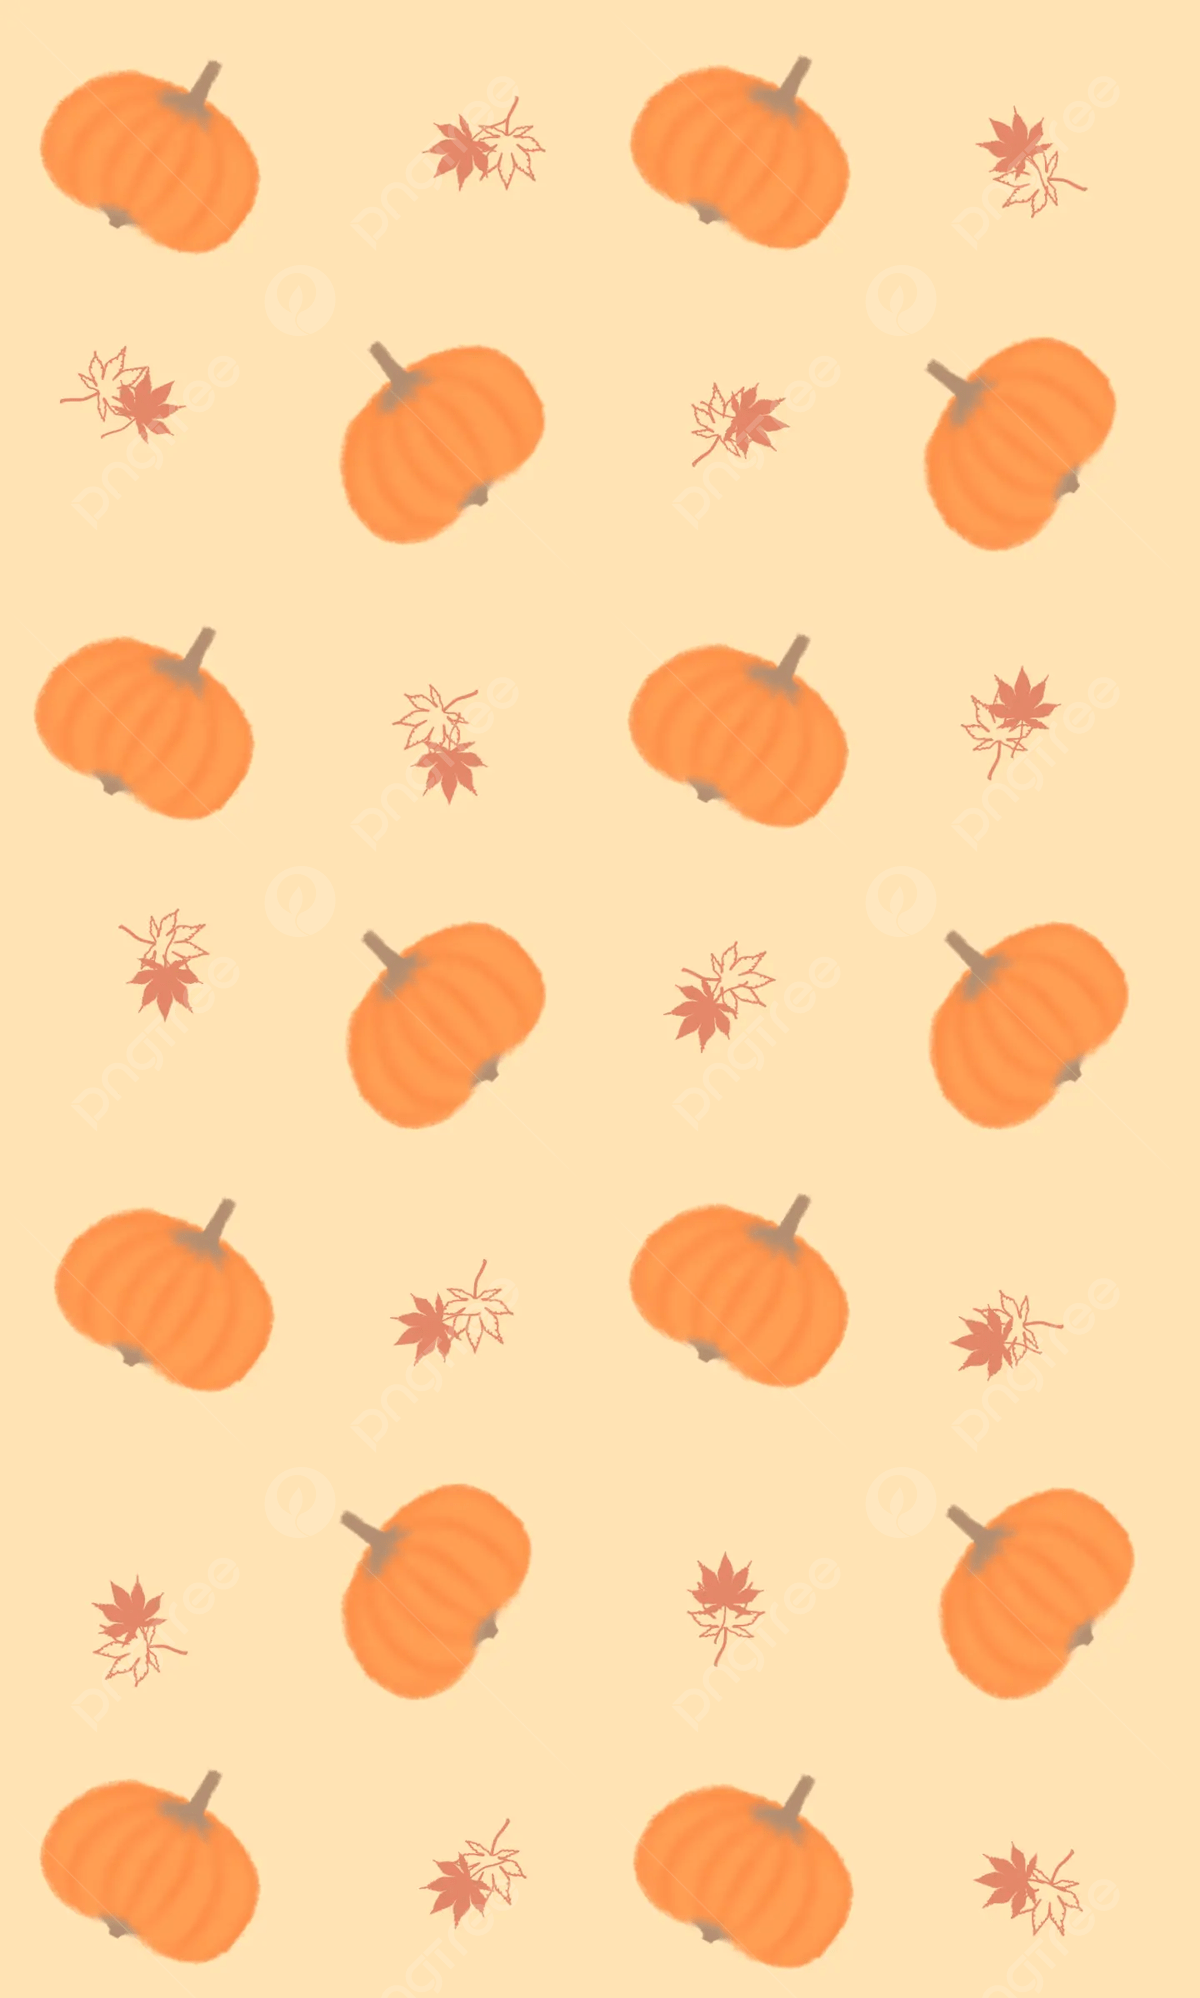 Cute Pumpkin Pattern Wallpaper Background Wallpaper Image For Free Download